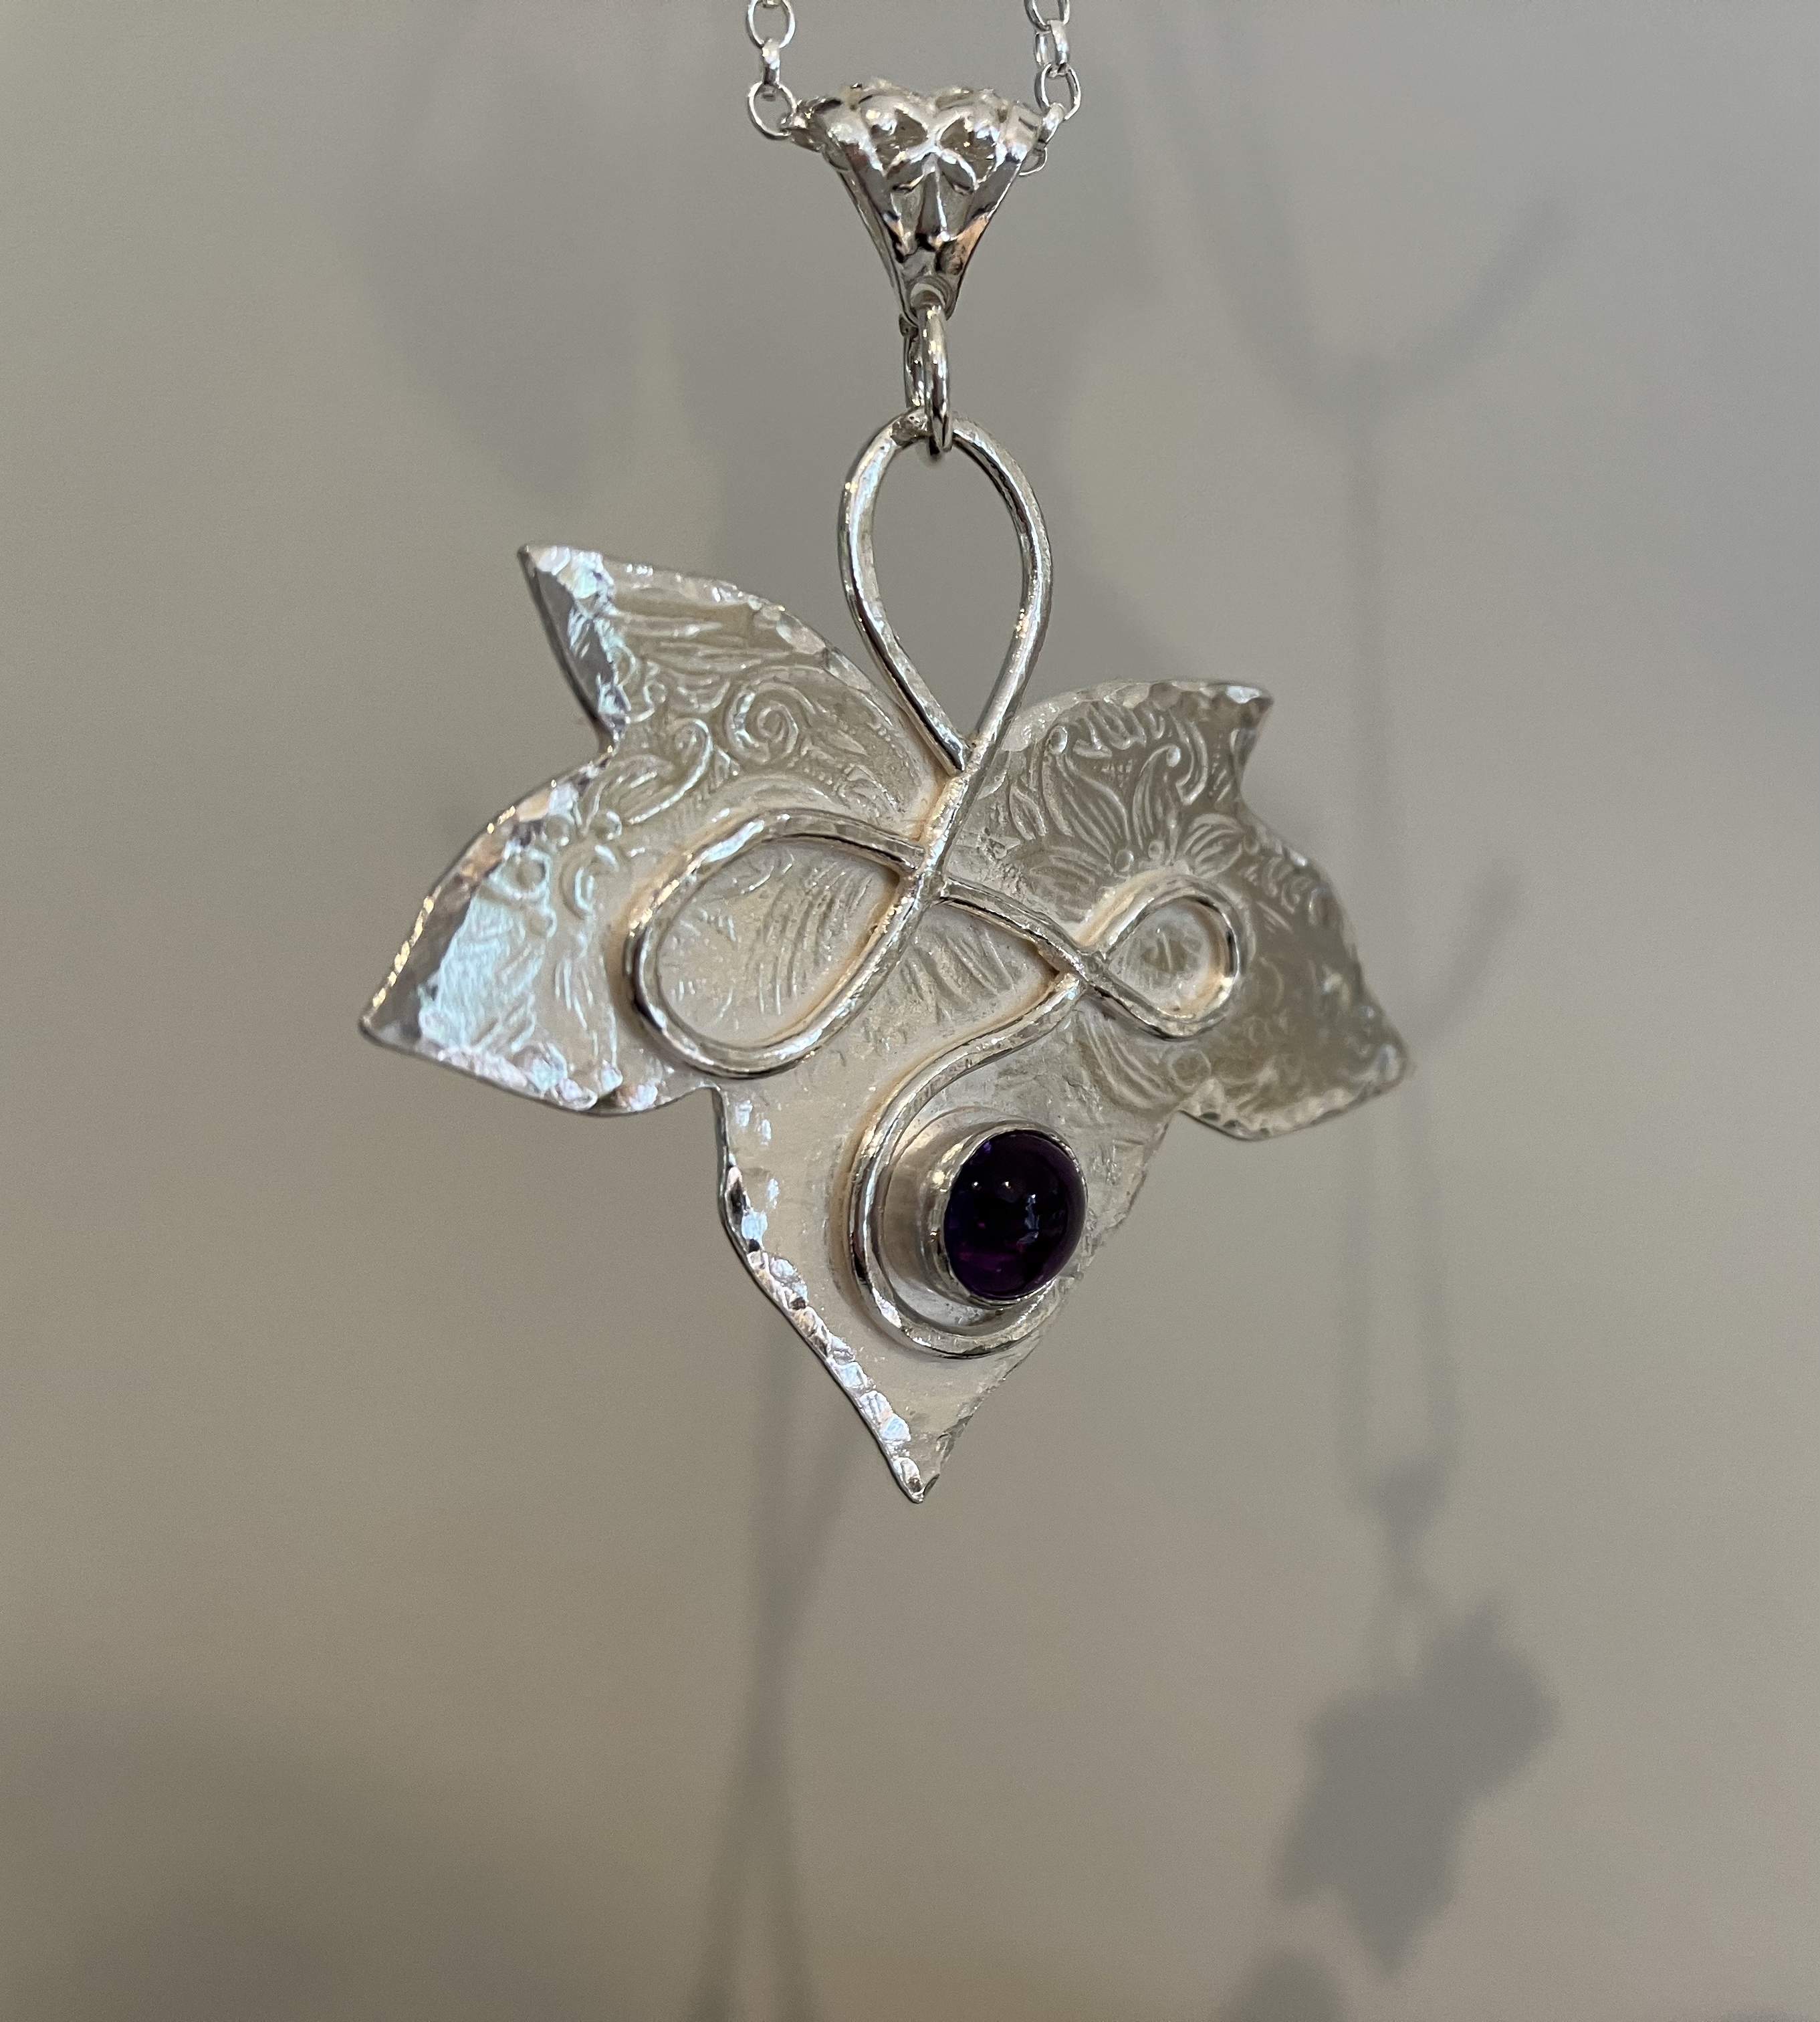 Silver leaf amethyst pendant with filigree bale